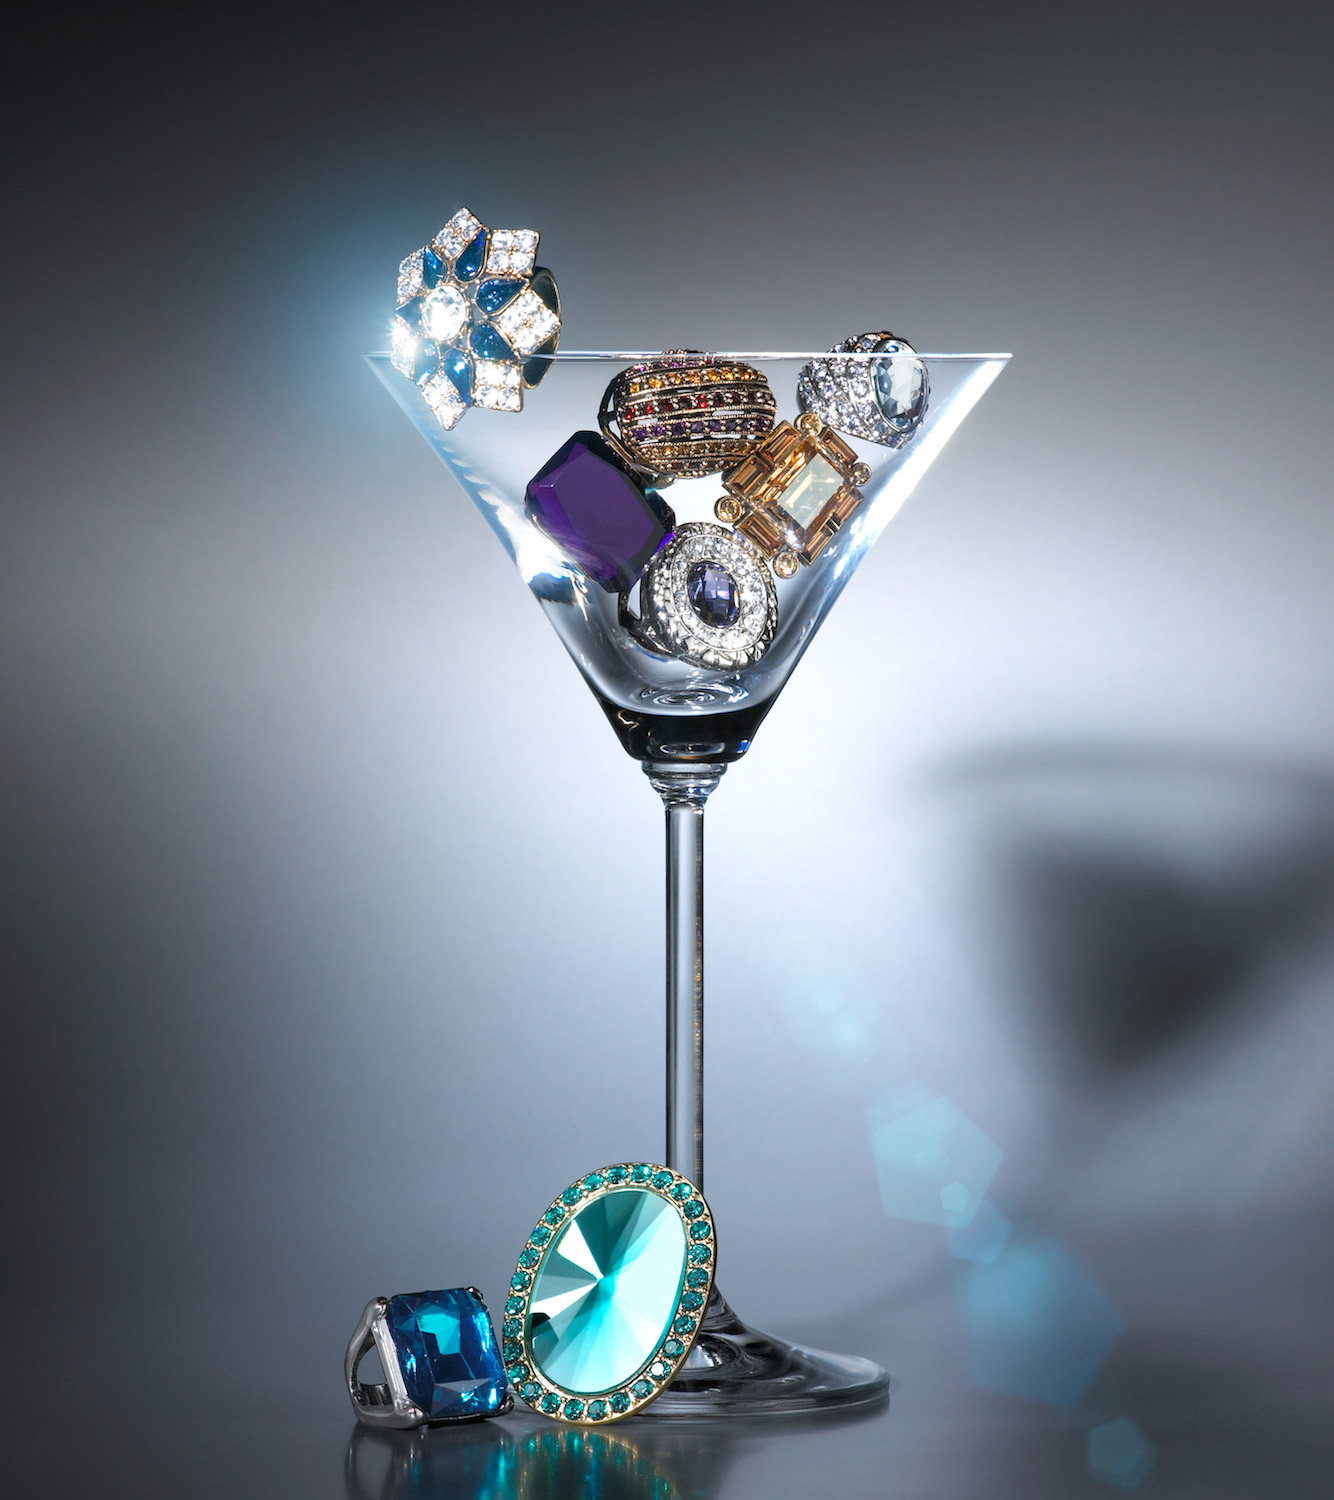  - 007_3_Still_Life_Product_Photographer_Pedersen_fashion_jewellery_rings_sparkle_diamonds_cocktail_glass